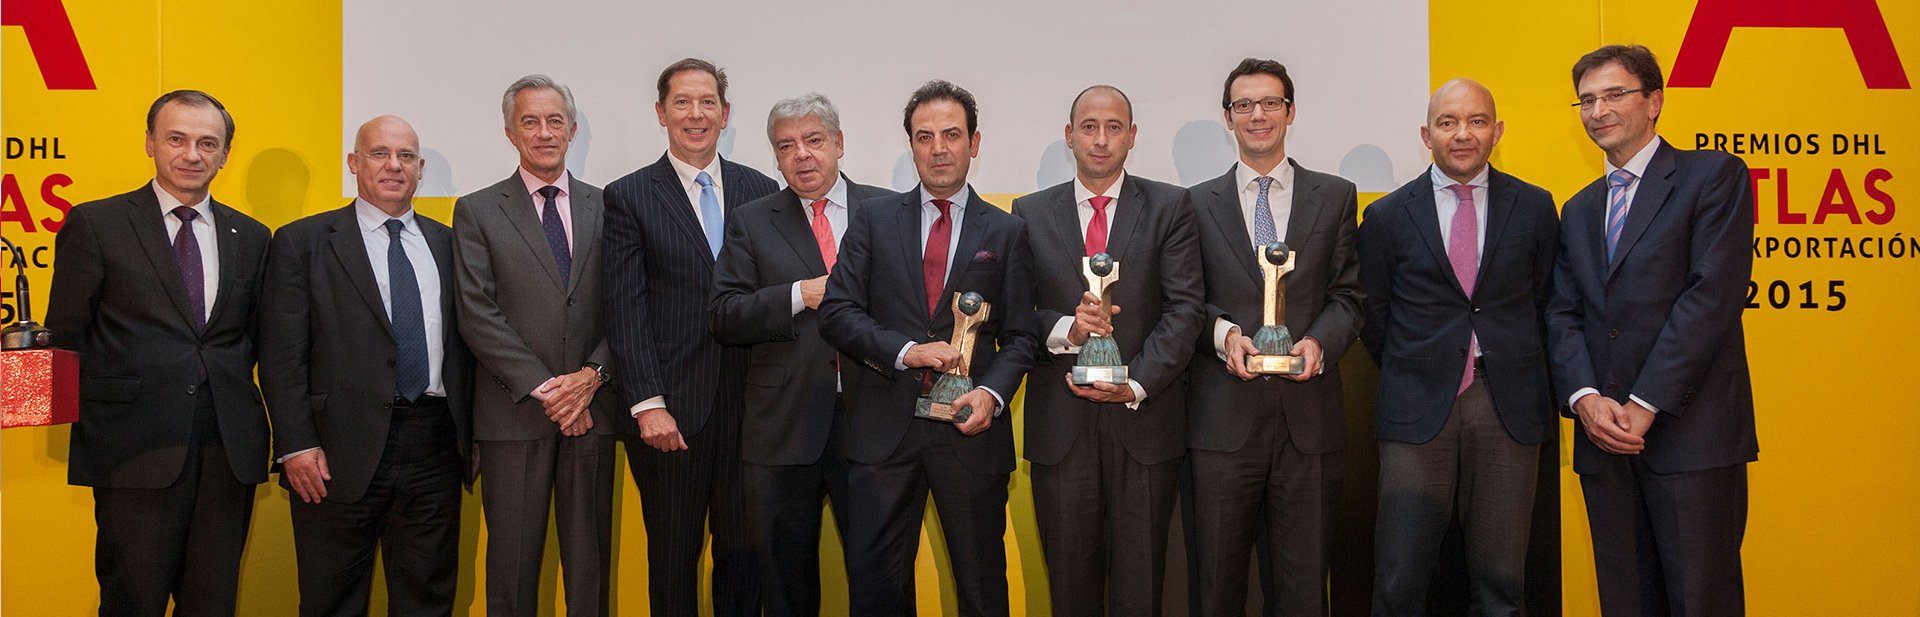 premios 2015